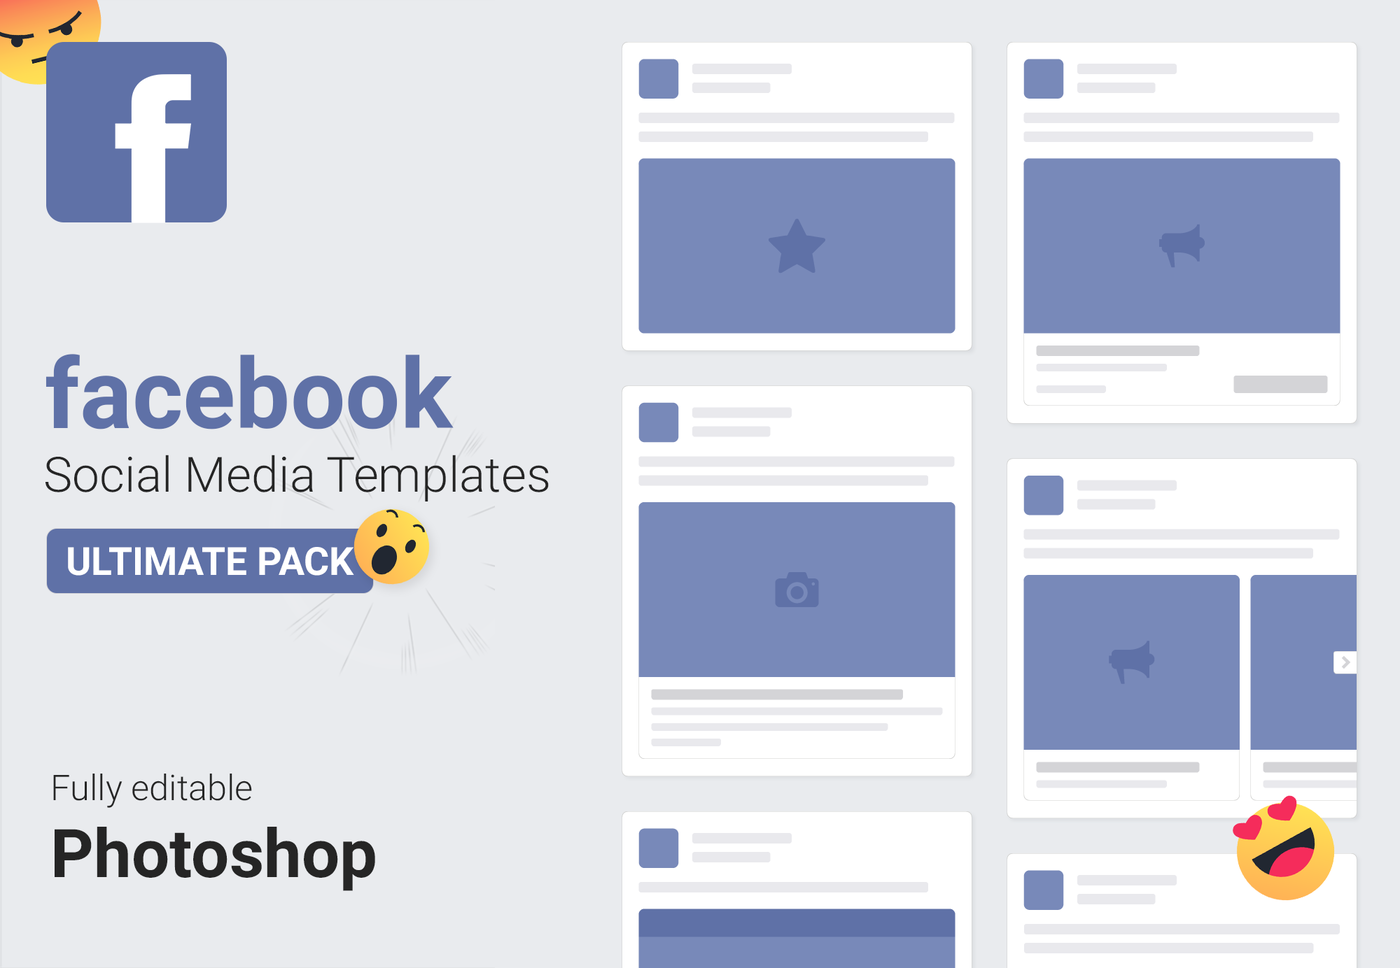 Download Facebook Psd Templates 2018 Social Media Mockups By Io Design Thehungryjpeg Com PSD Mockup Templates